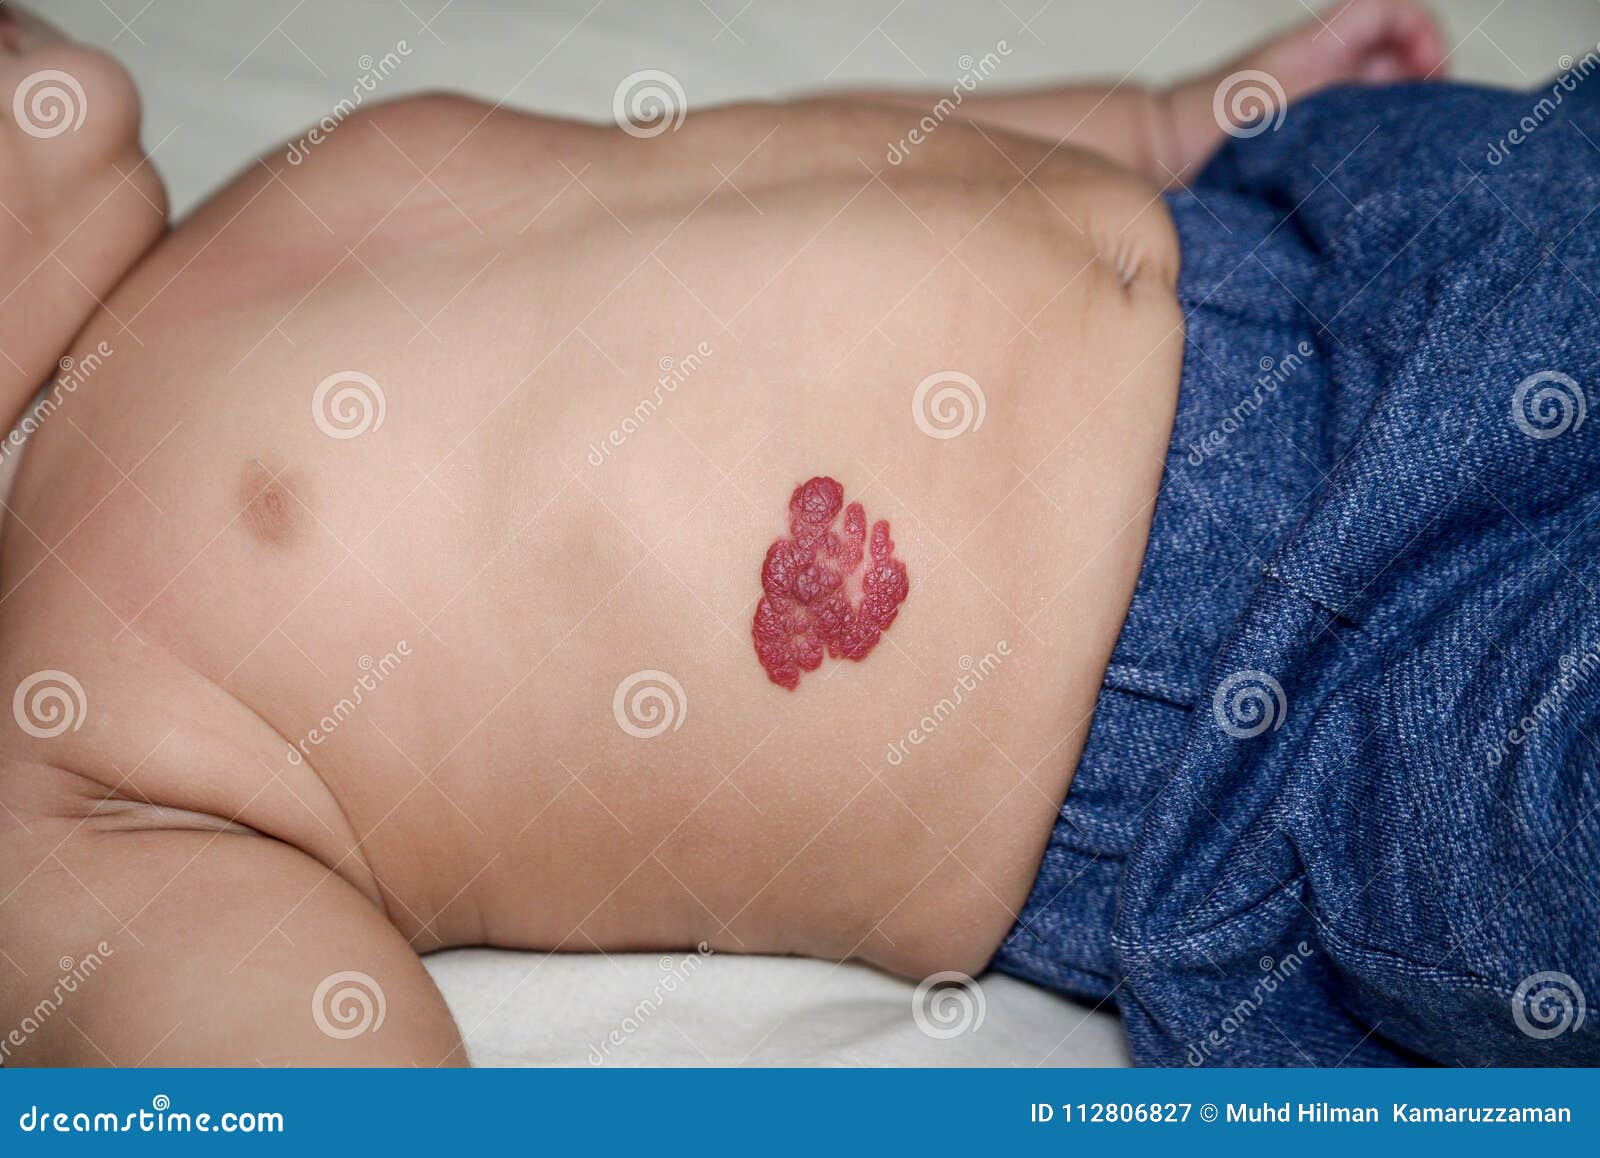 infantile hemangioma red birthmark on the baby`s belly